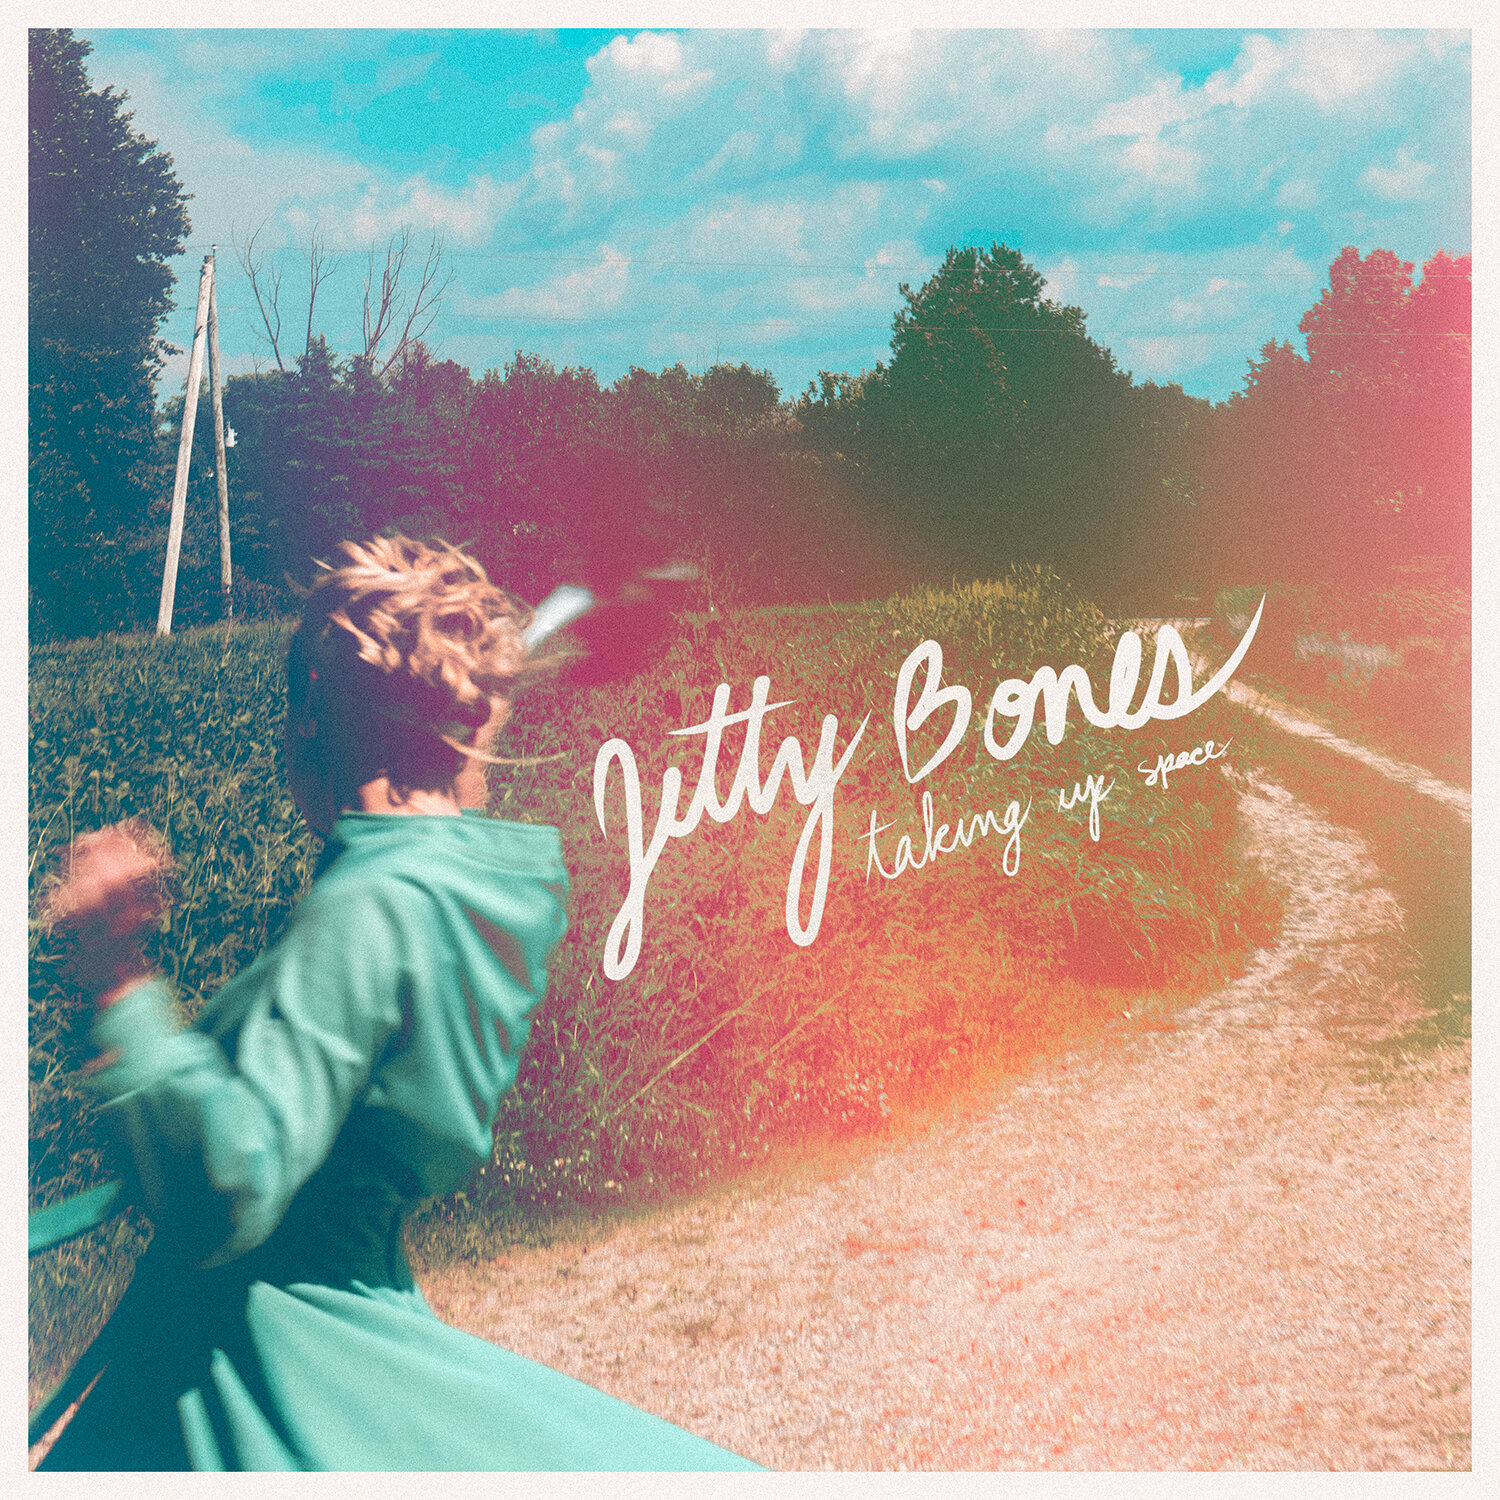 Jetty Bones - "Taking Up Space"